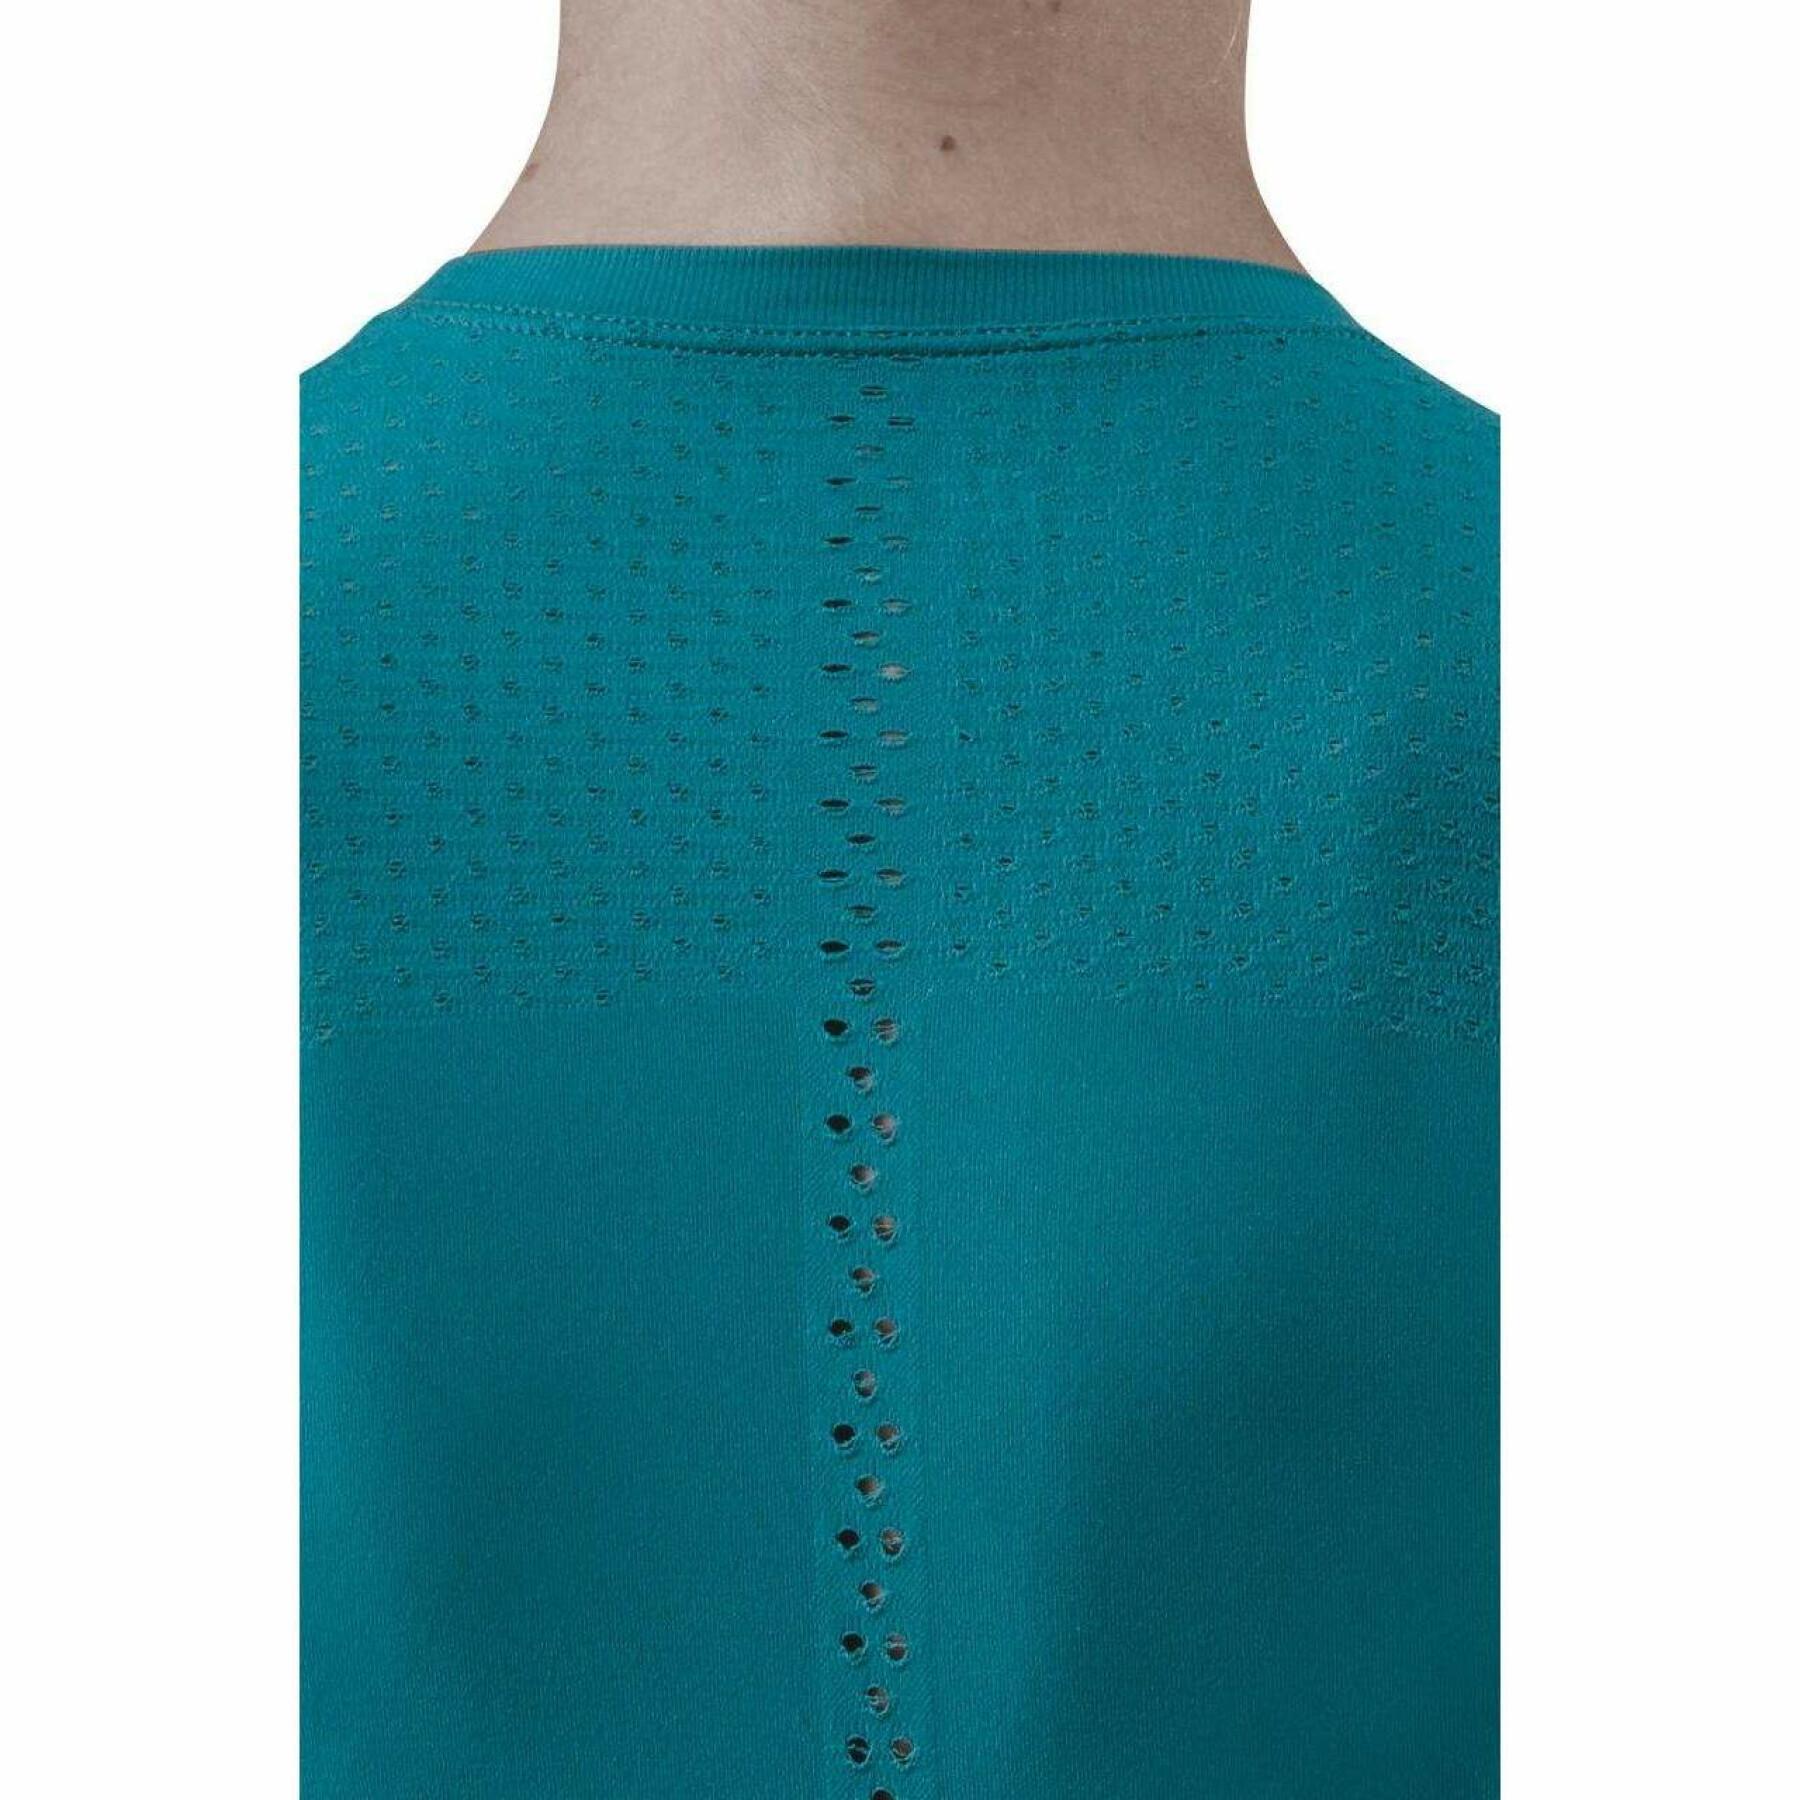 Camisola ultraleve de manga comprida para mulheres CEP Compression Run